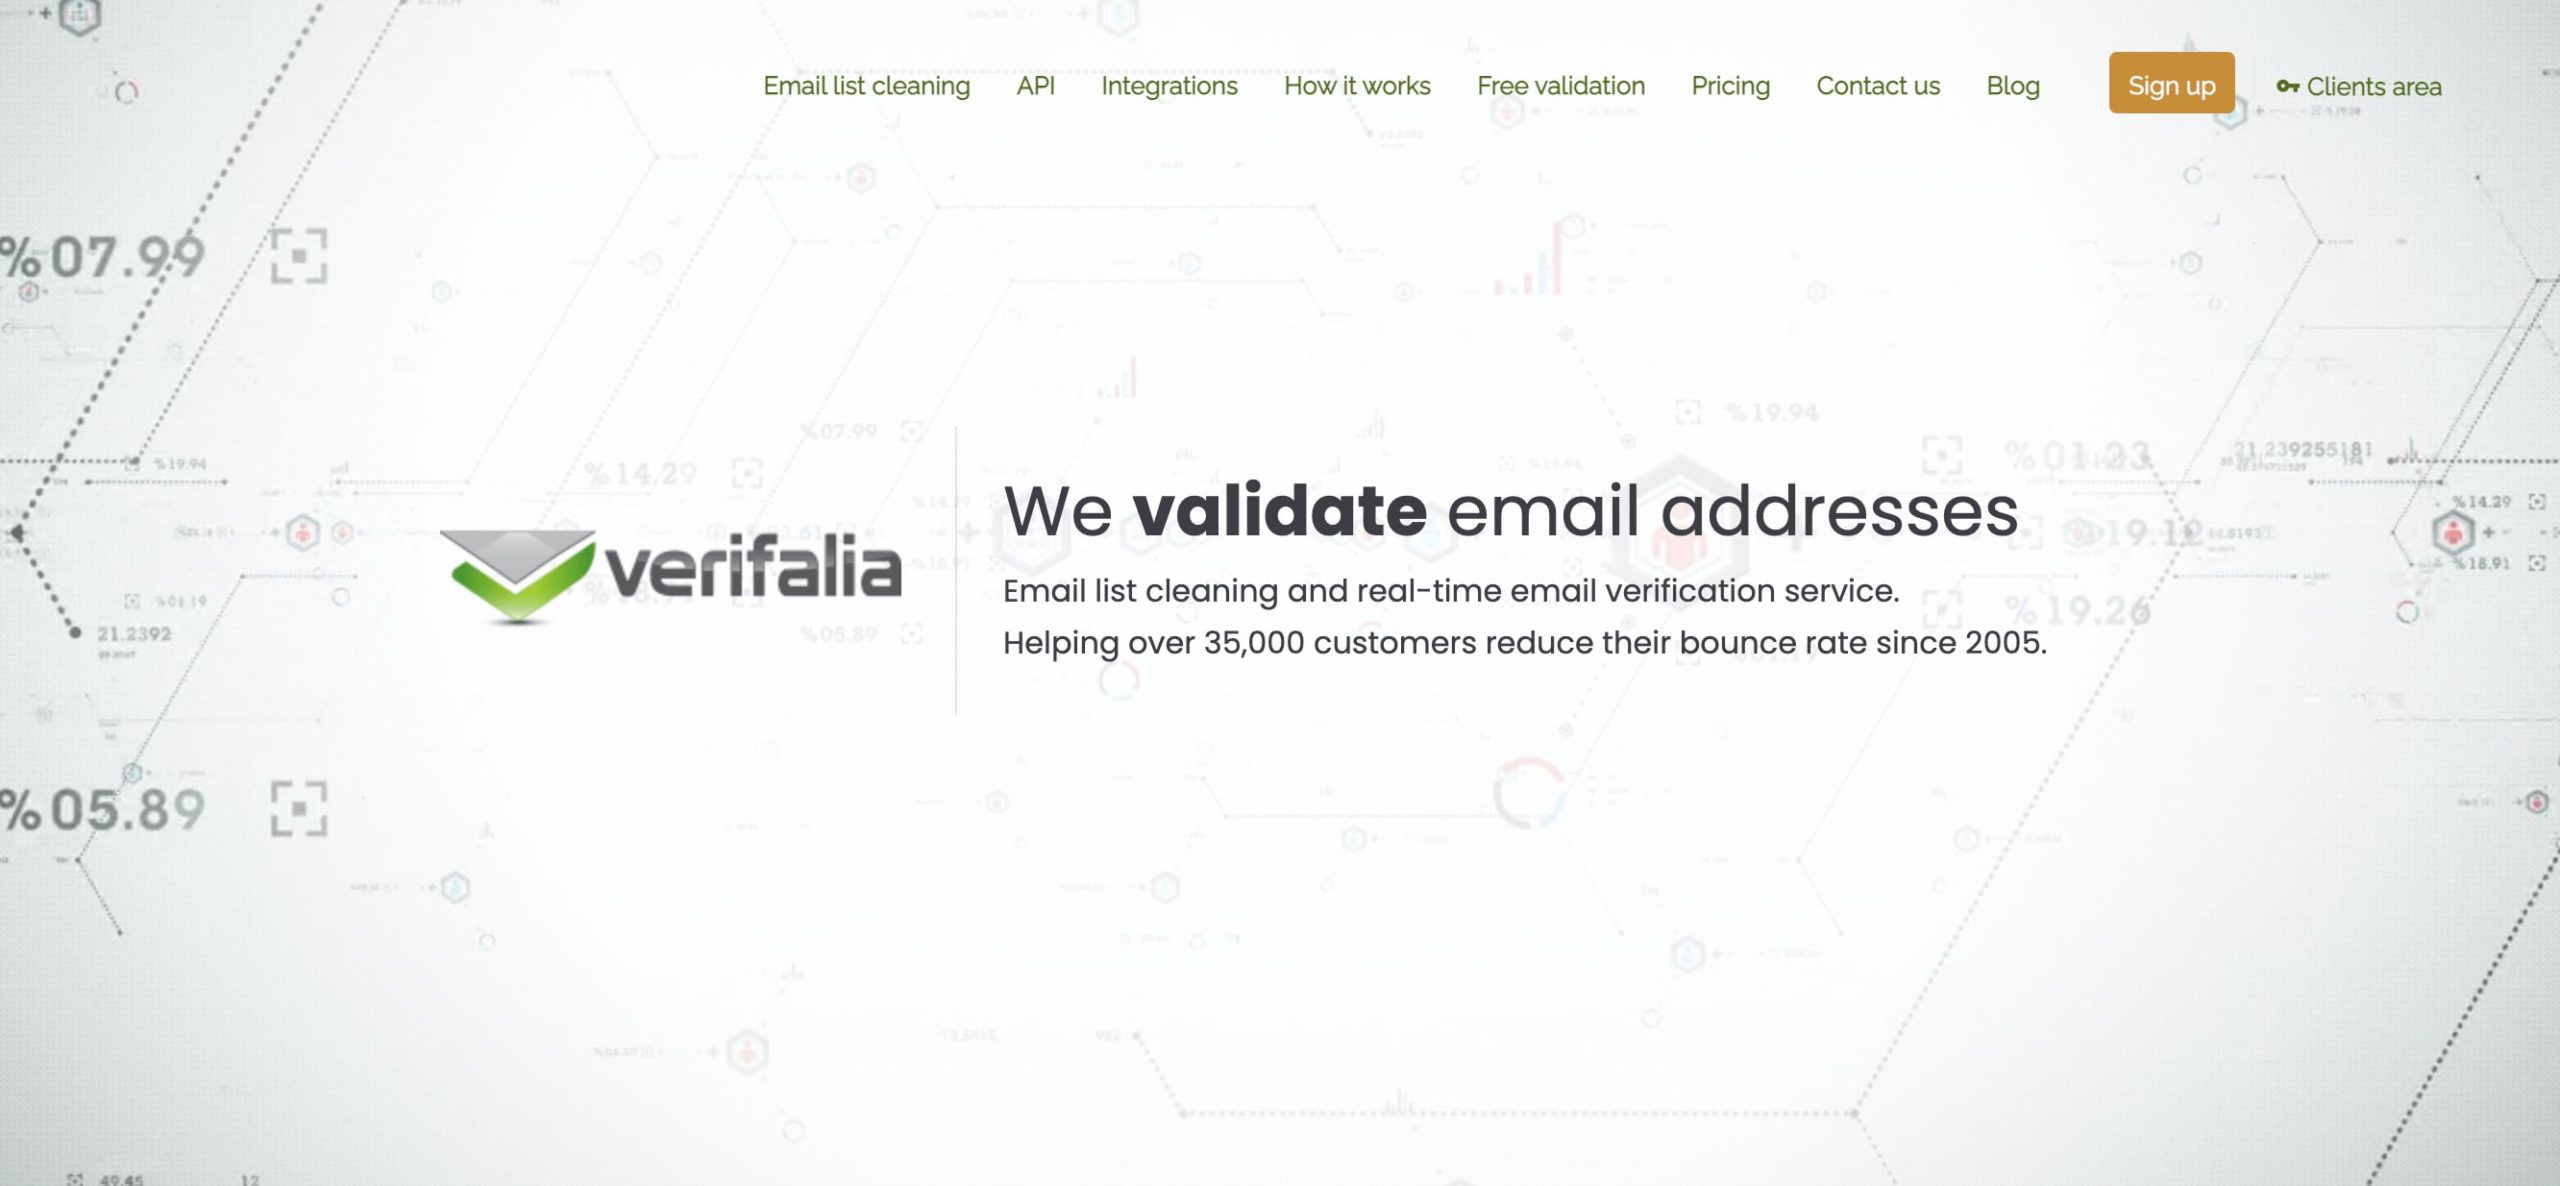 Verifalia - Email verification tool 